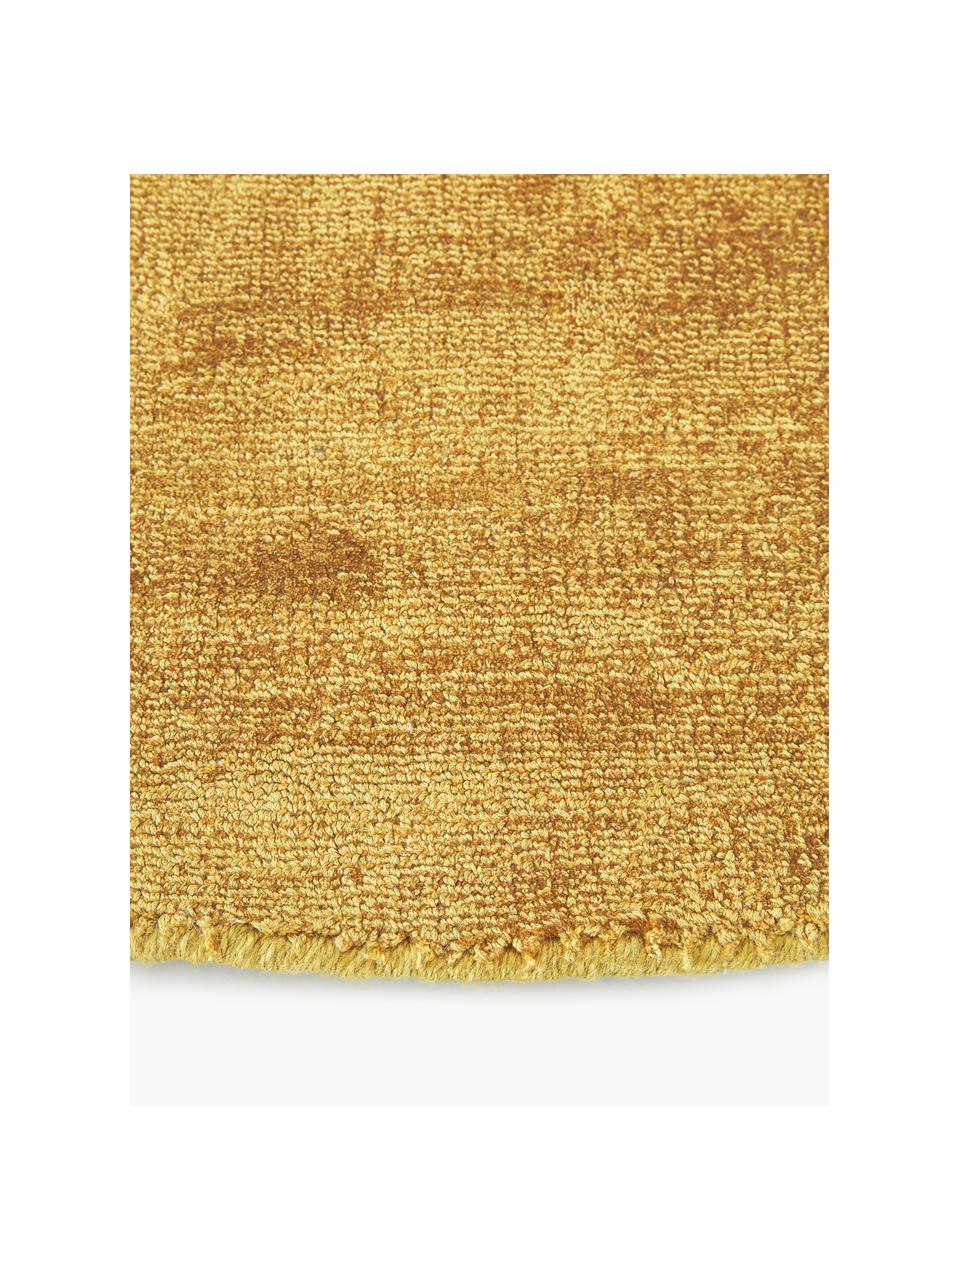 Alfombra redonda artesanal de viscosa Jane, Parte superior: 100% viscosa, Reverso: 100% algodón, Amarillo sol, Ø 115 cm (Tamaño S)